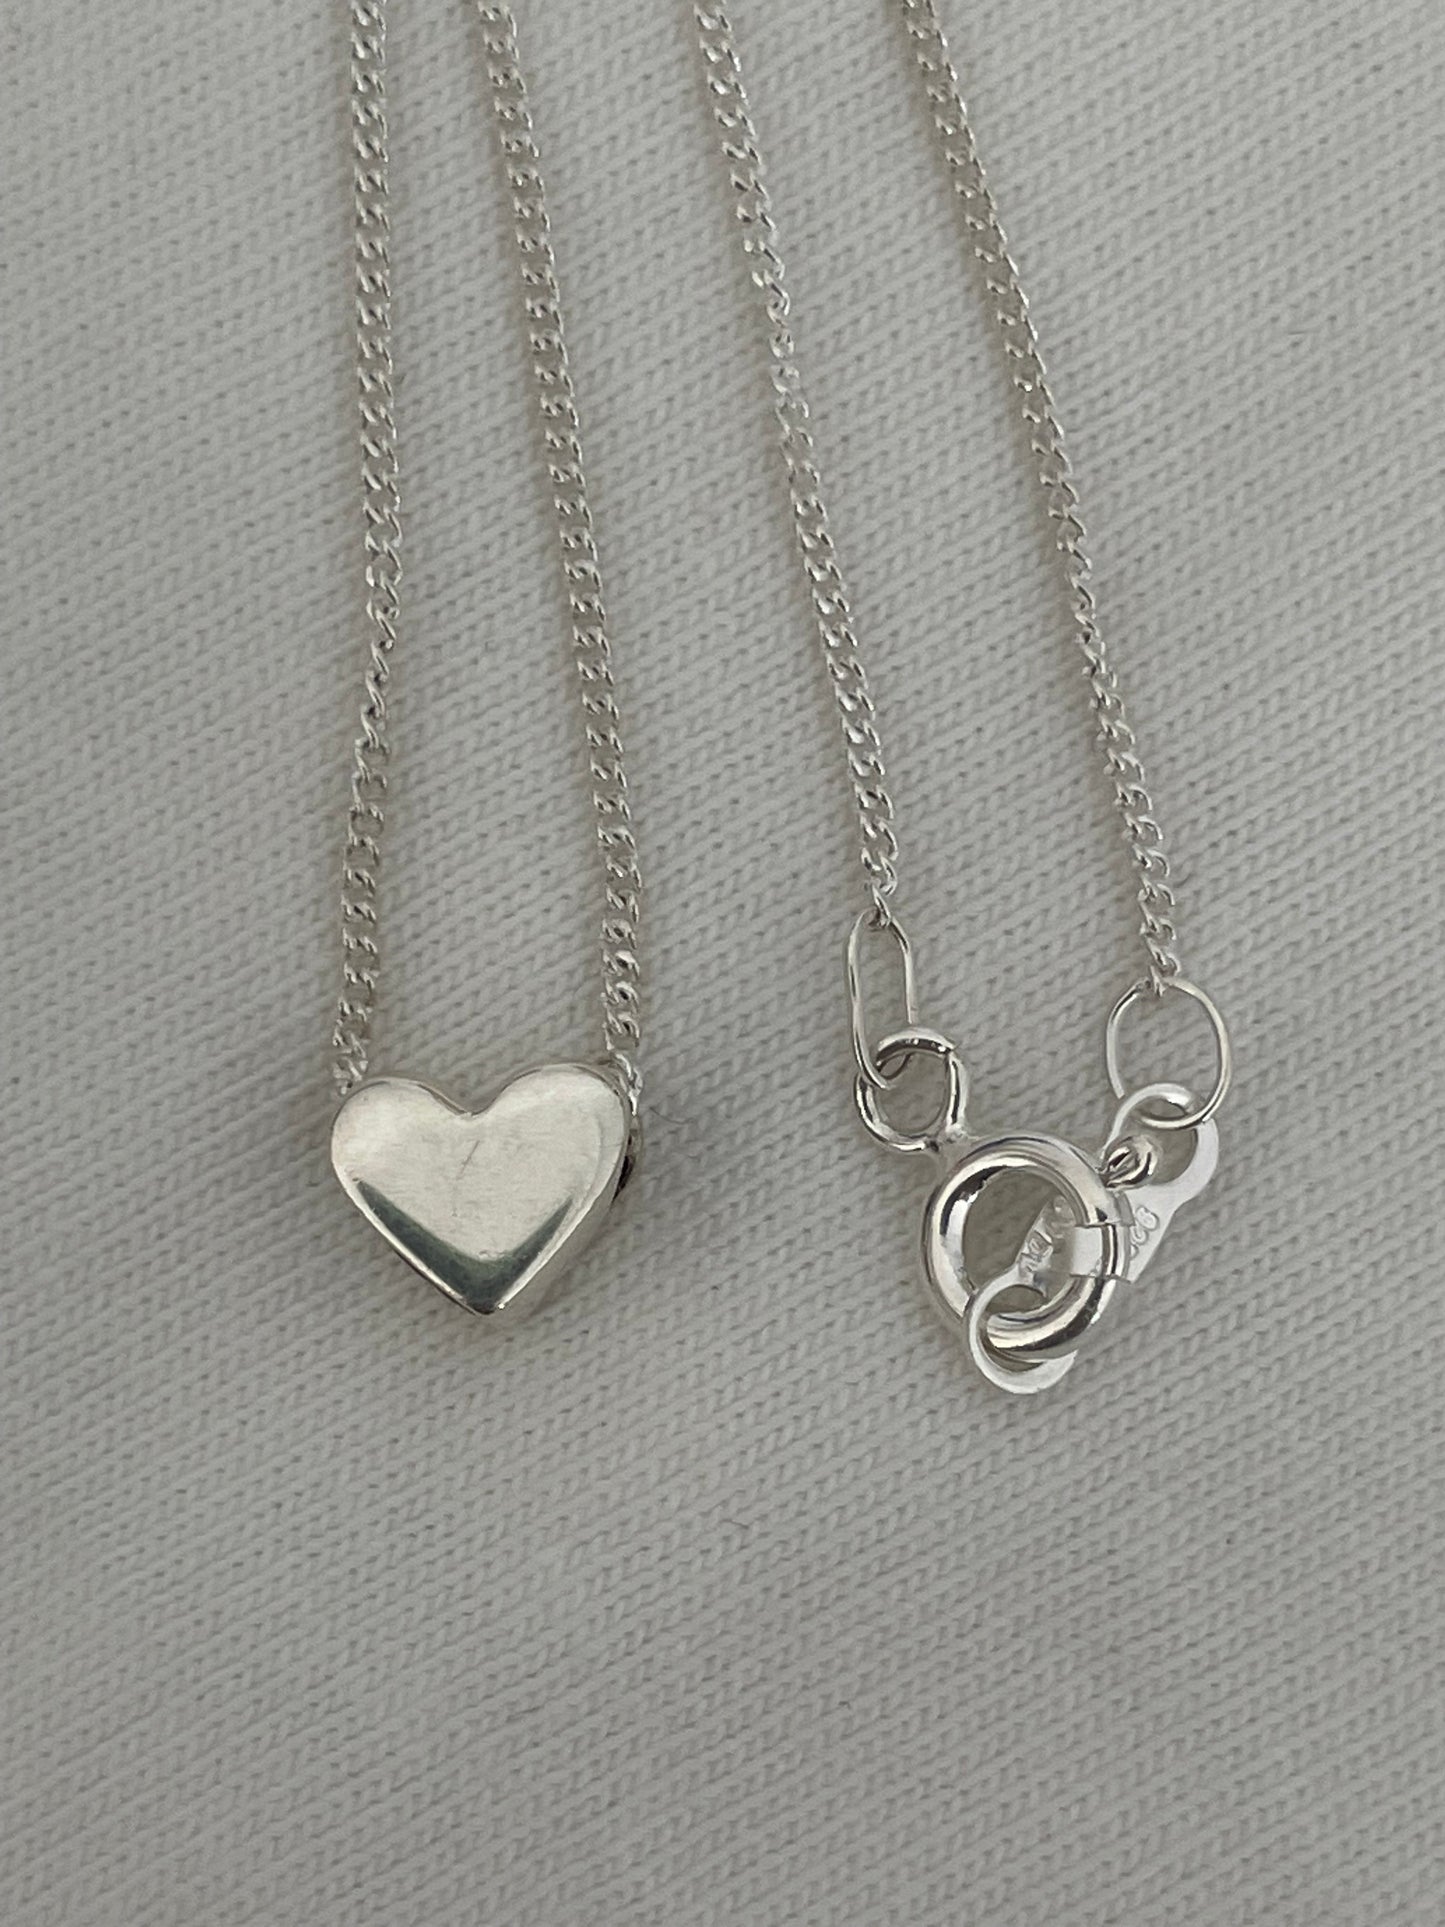 Hola Bella Heart Necklace